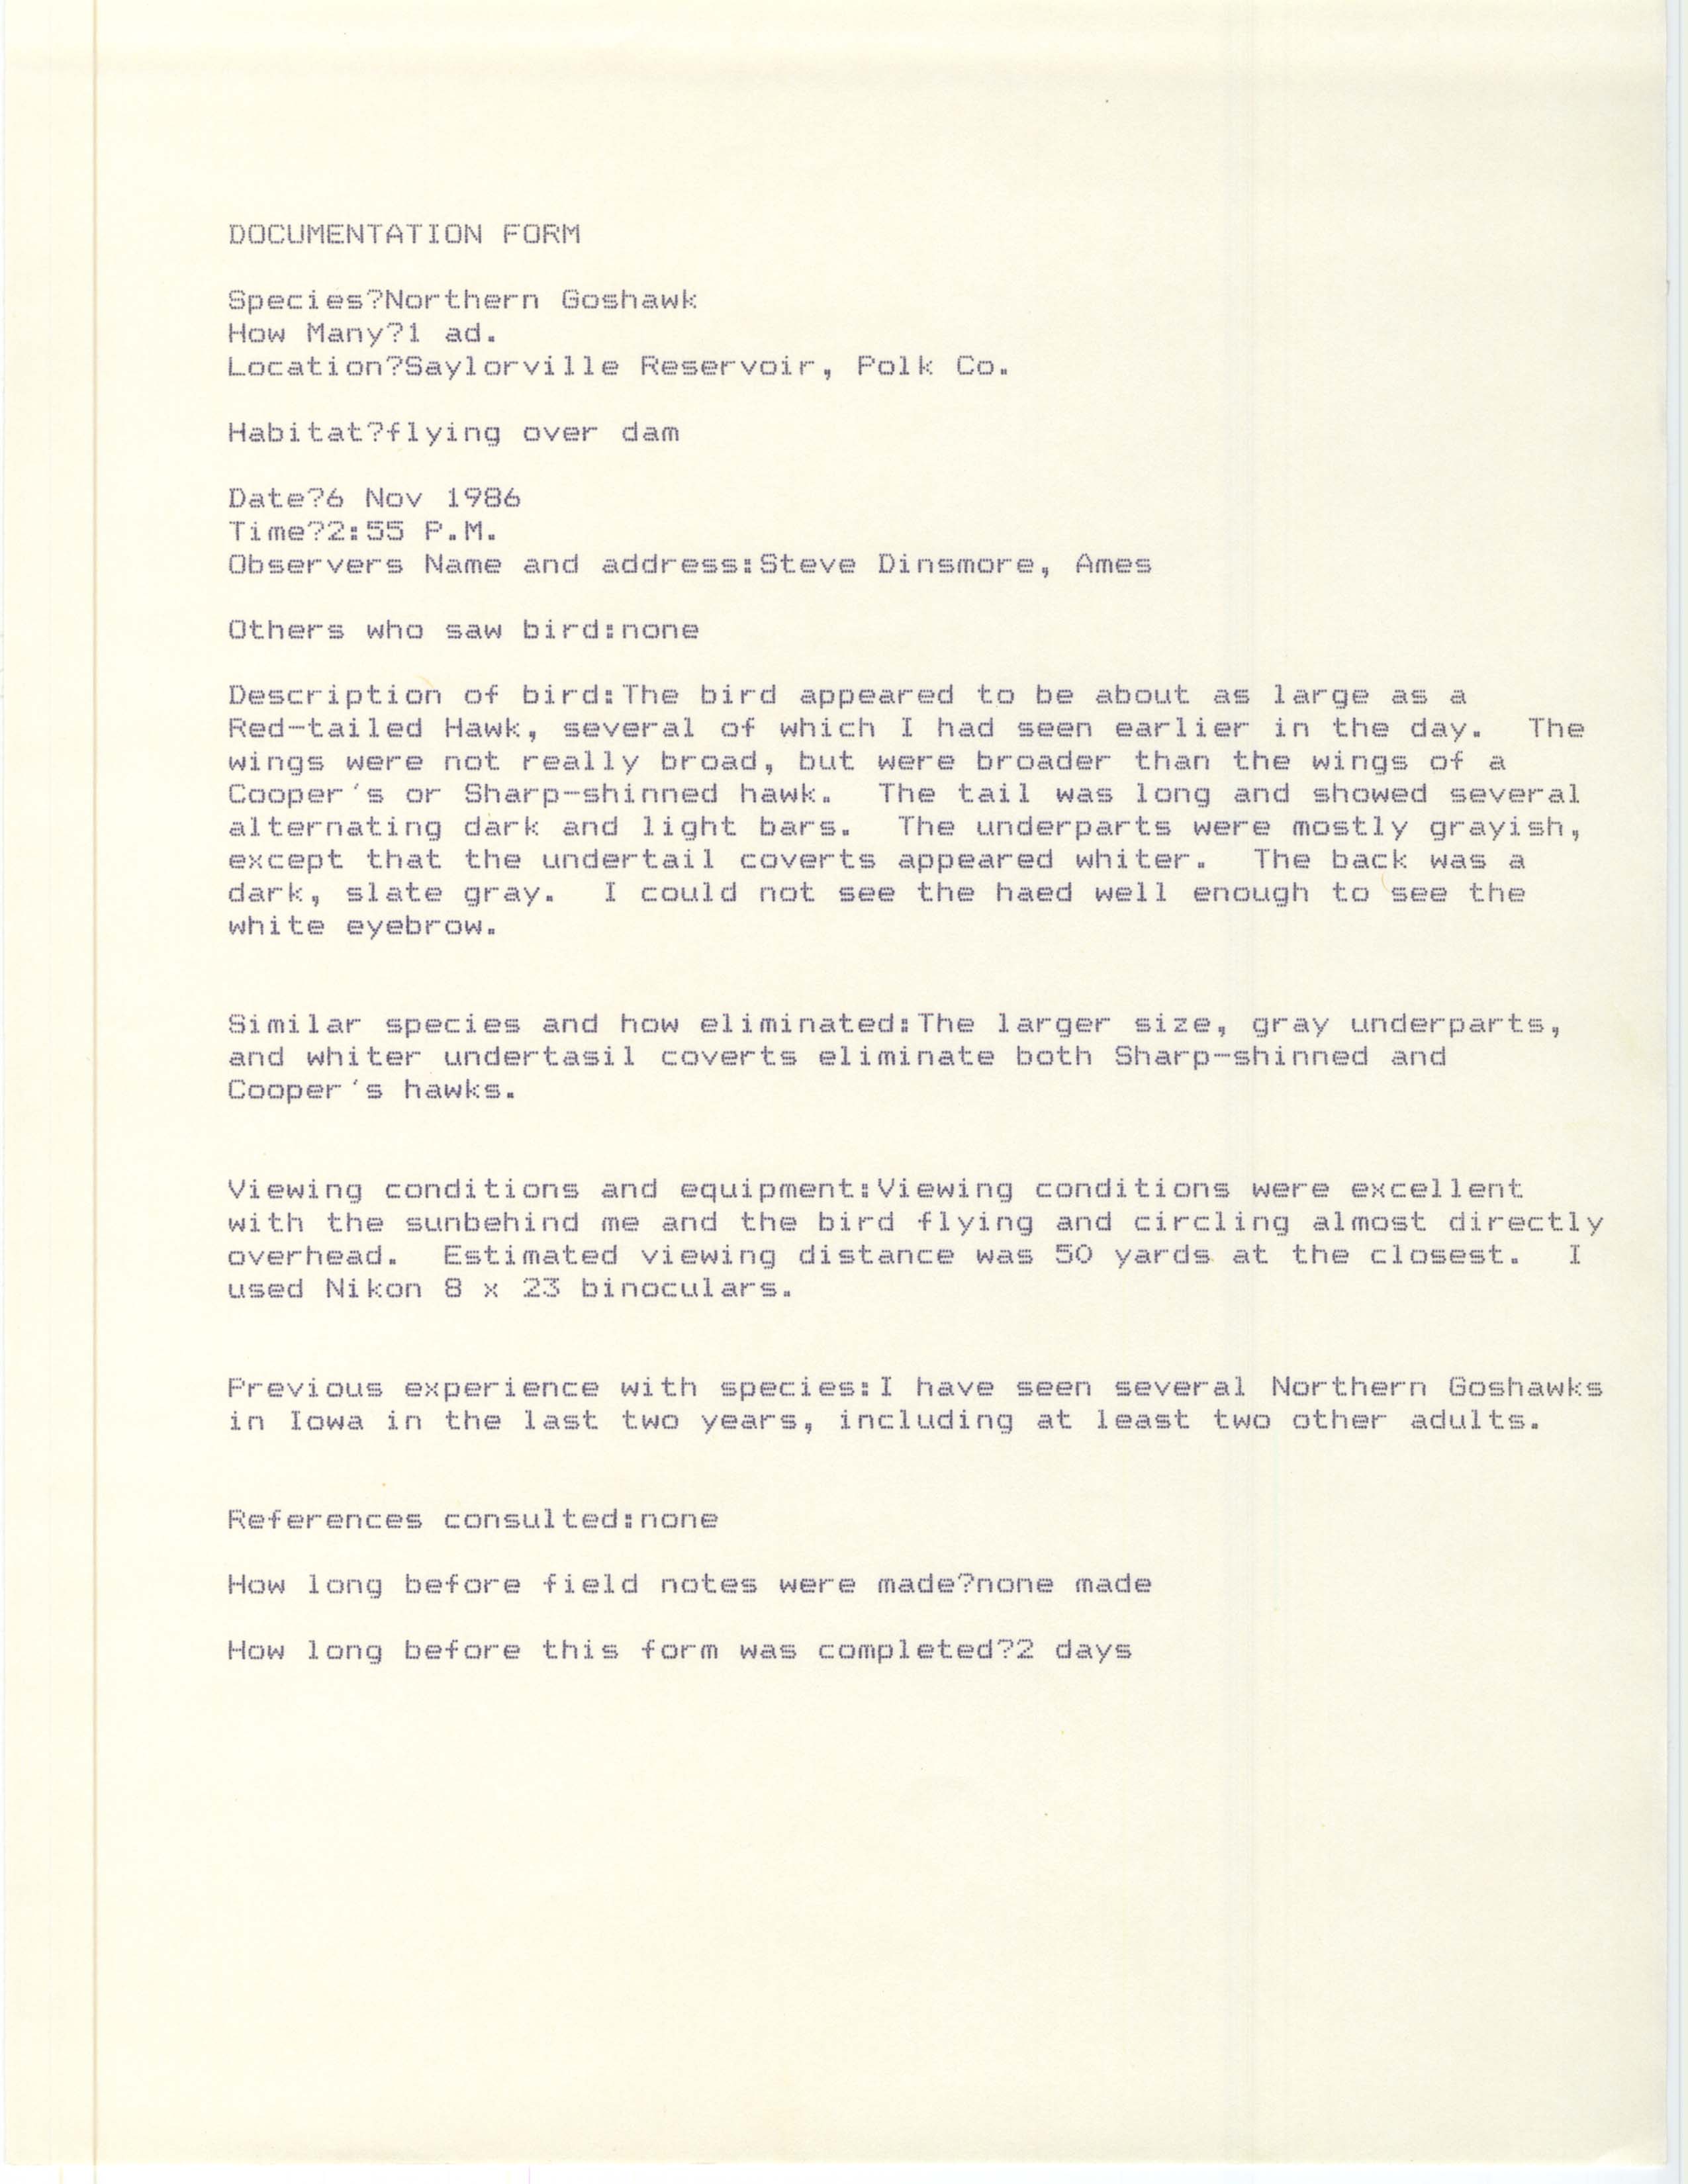 Rare bird documentation form for Northern Goshawk at Saylorville Reservoir, 1986